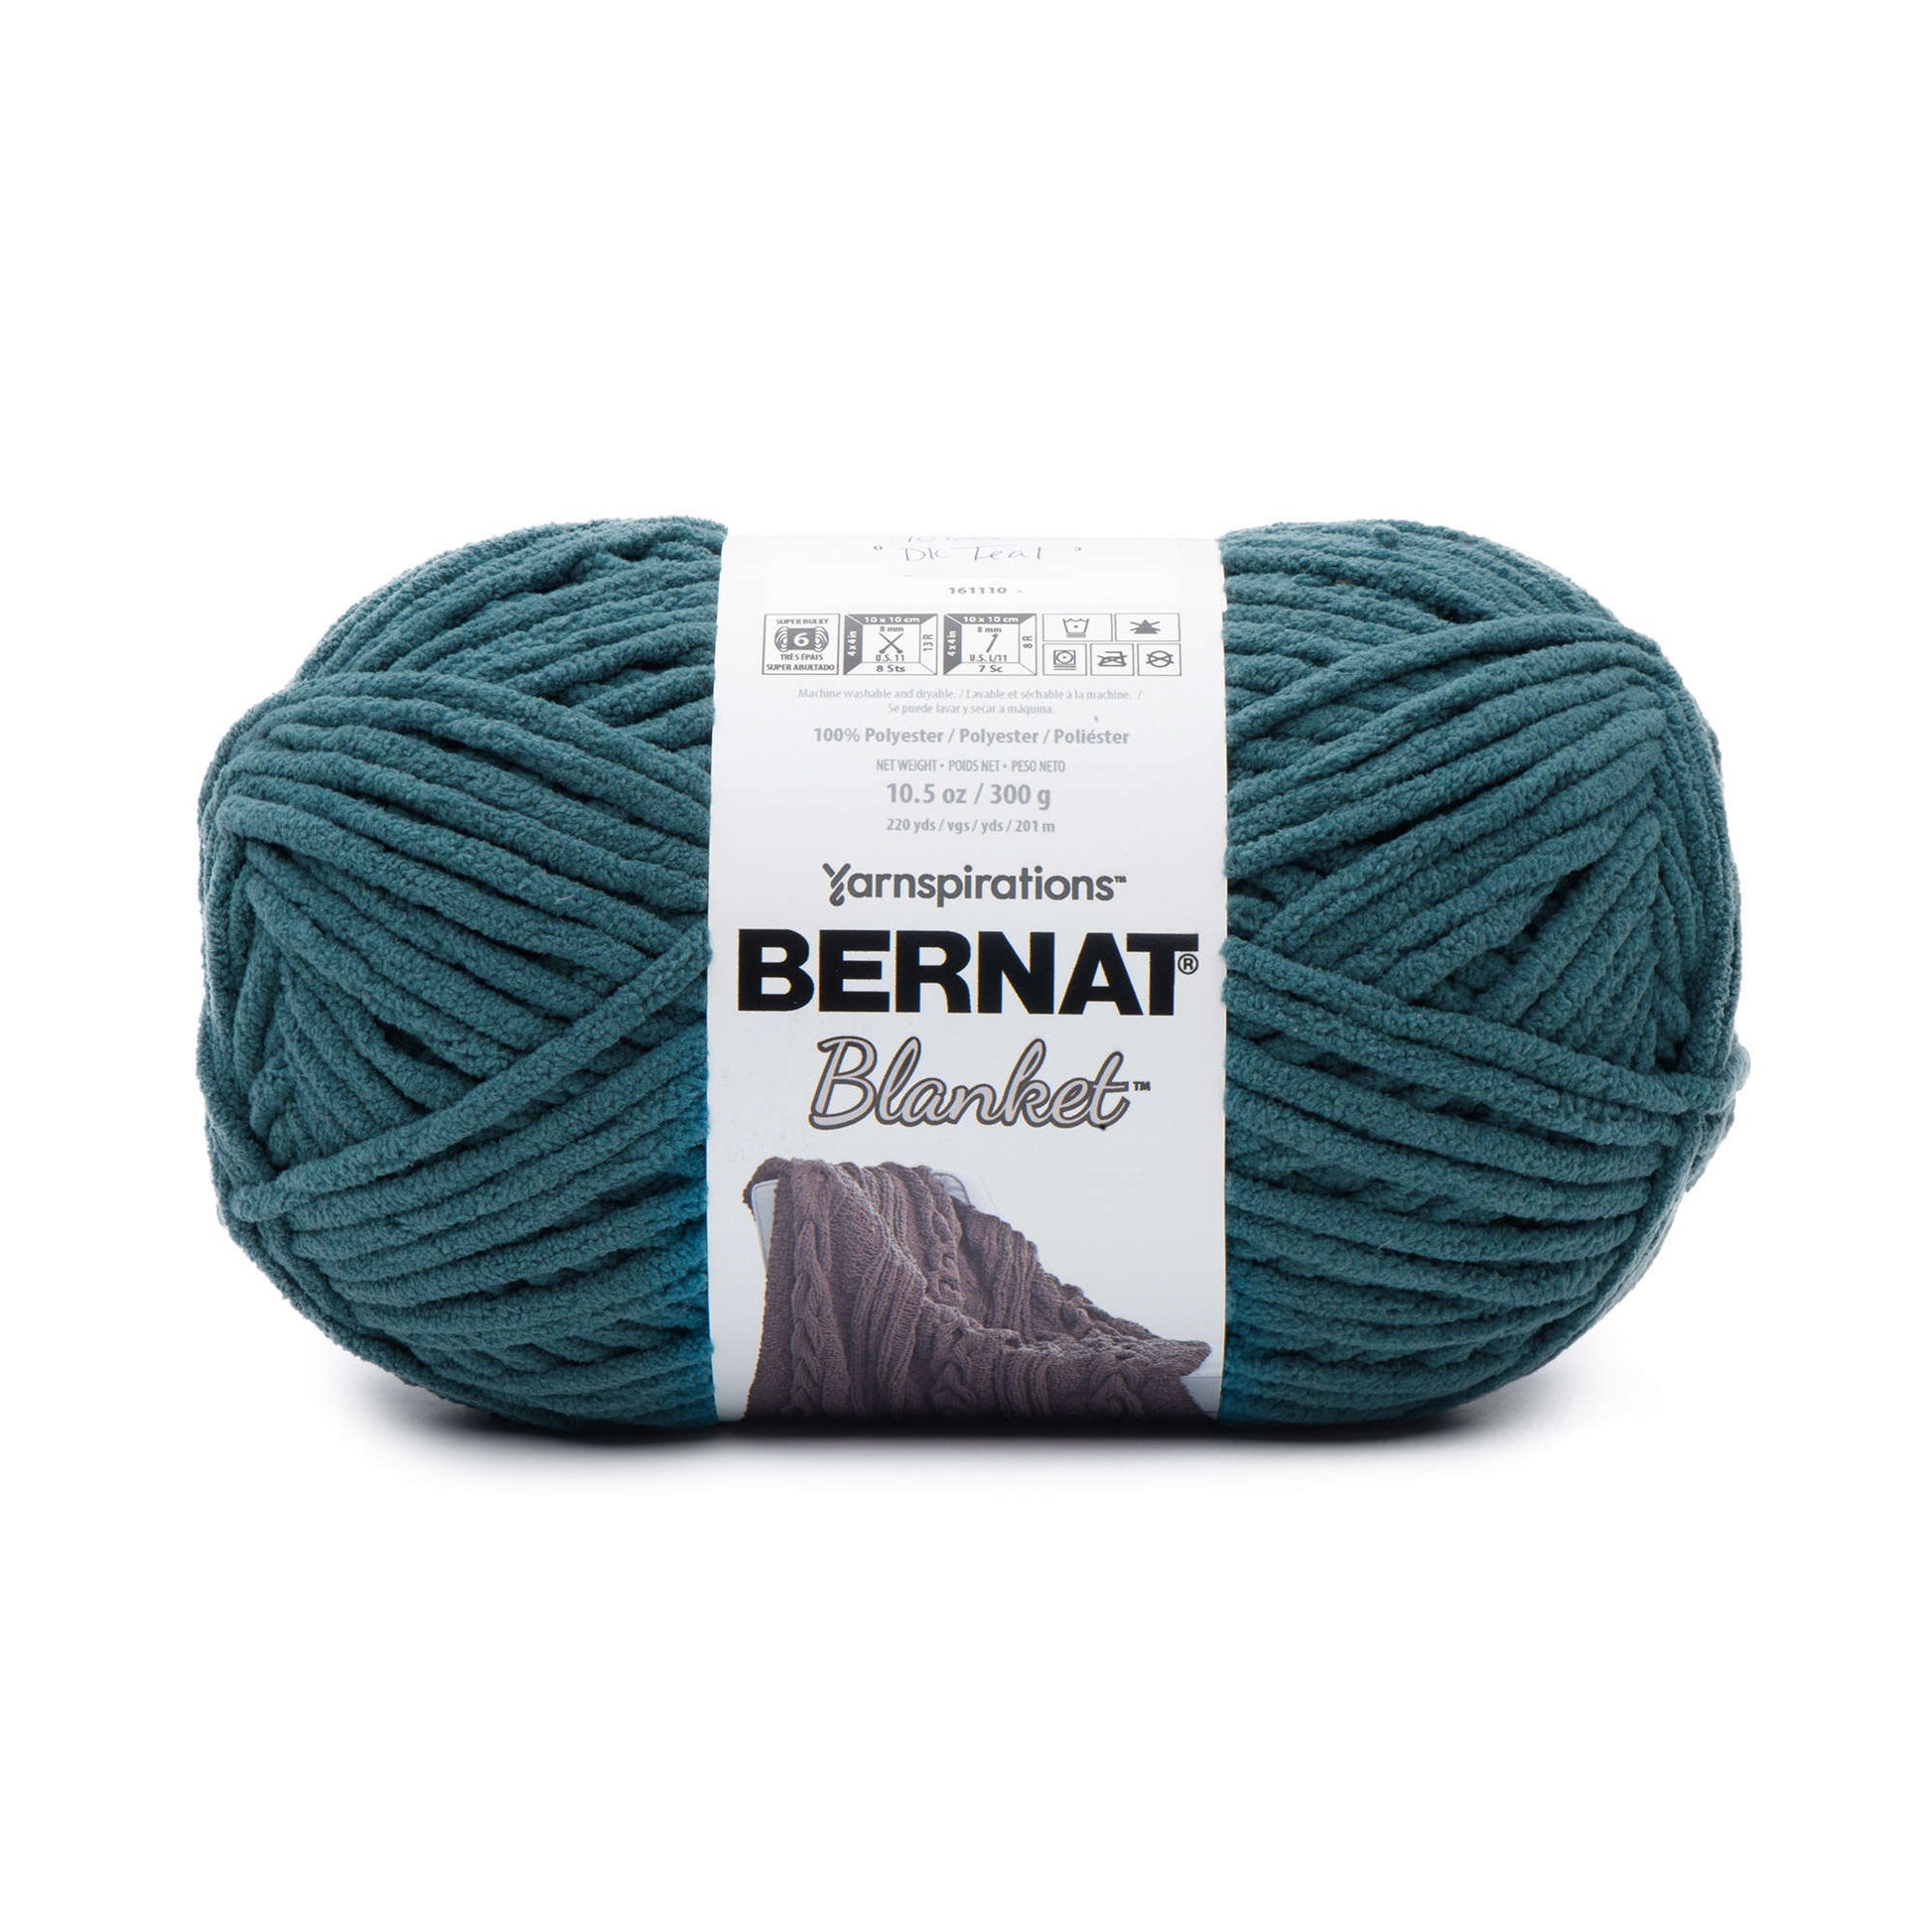 Bernat Blanket Yarn (300g/10.5oz) Dark Teal